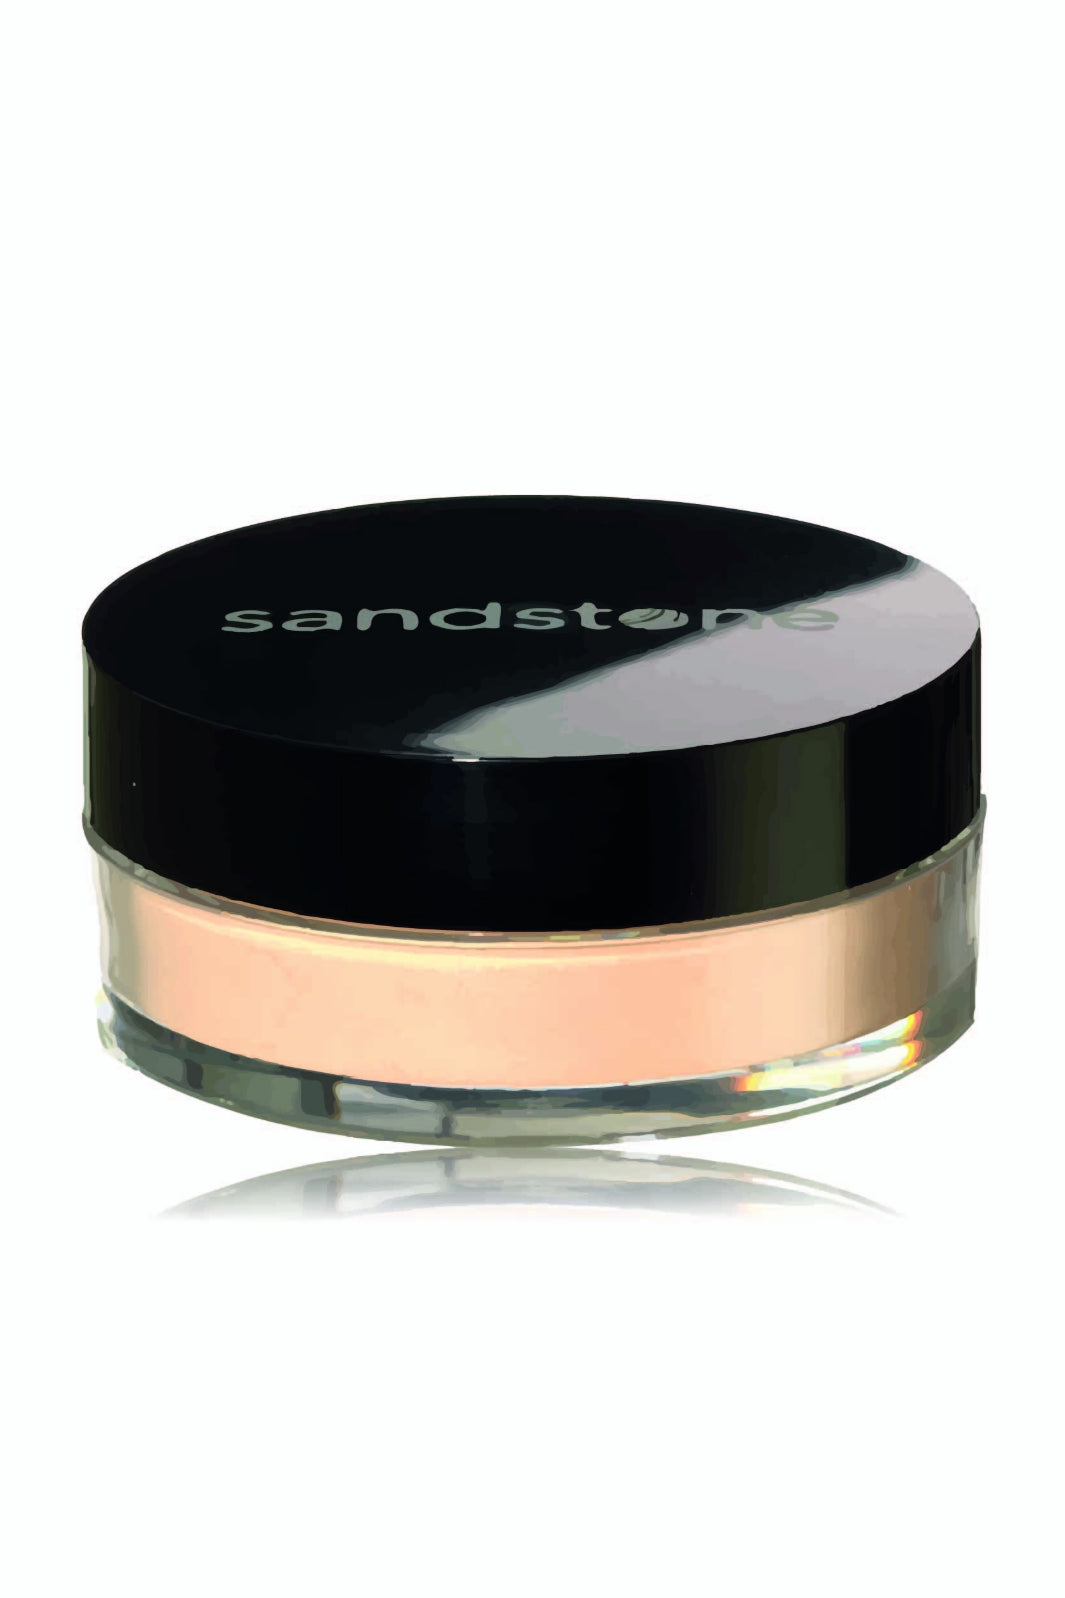 Sandstone - Velvet Skin Mineral Powder - 02 Ivory Makeup 